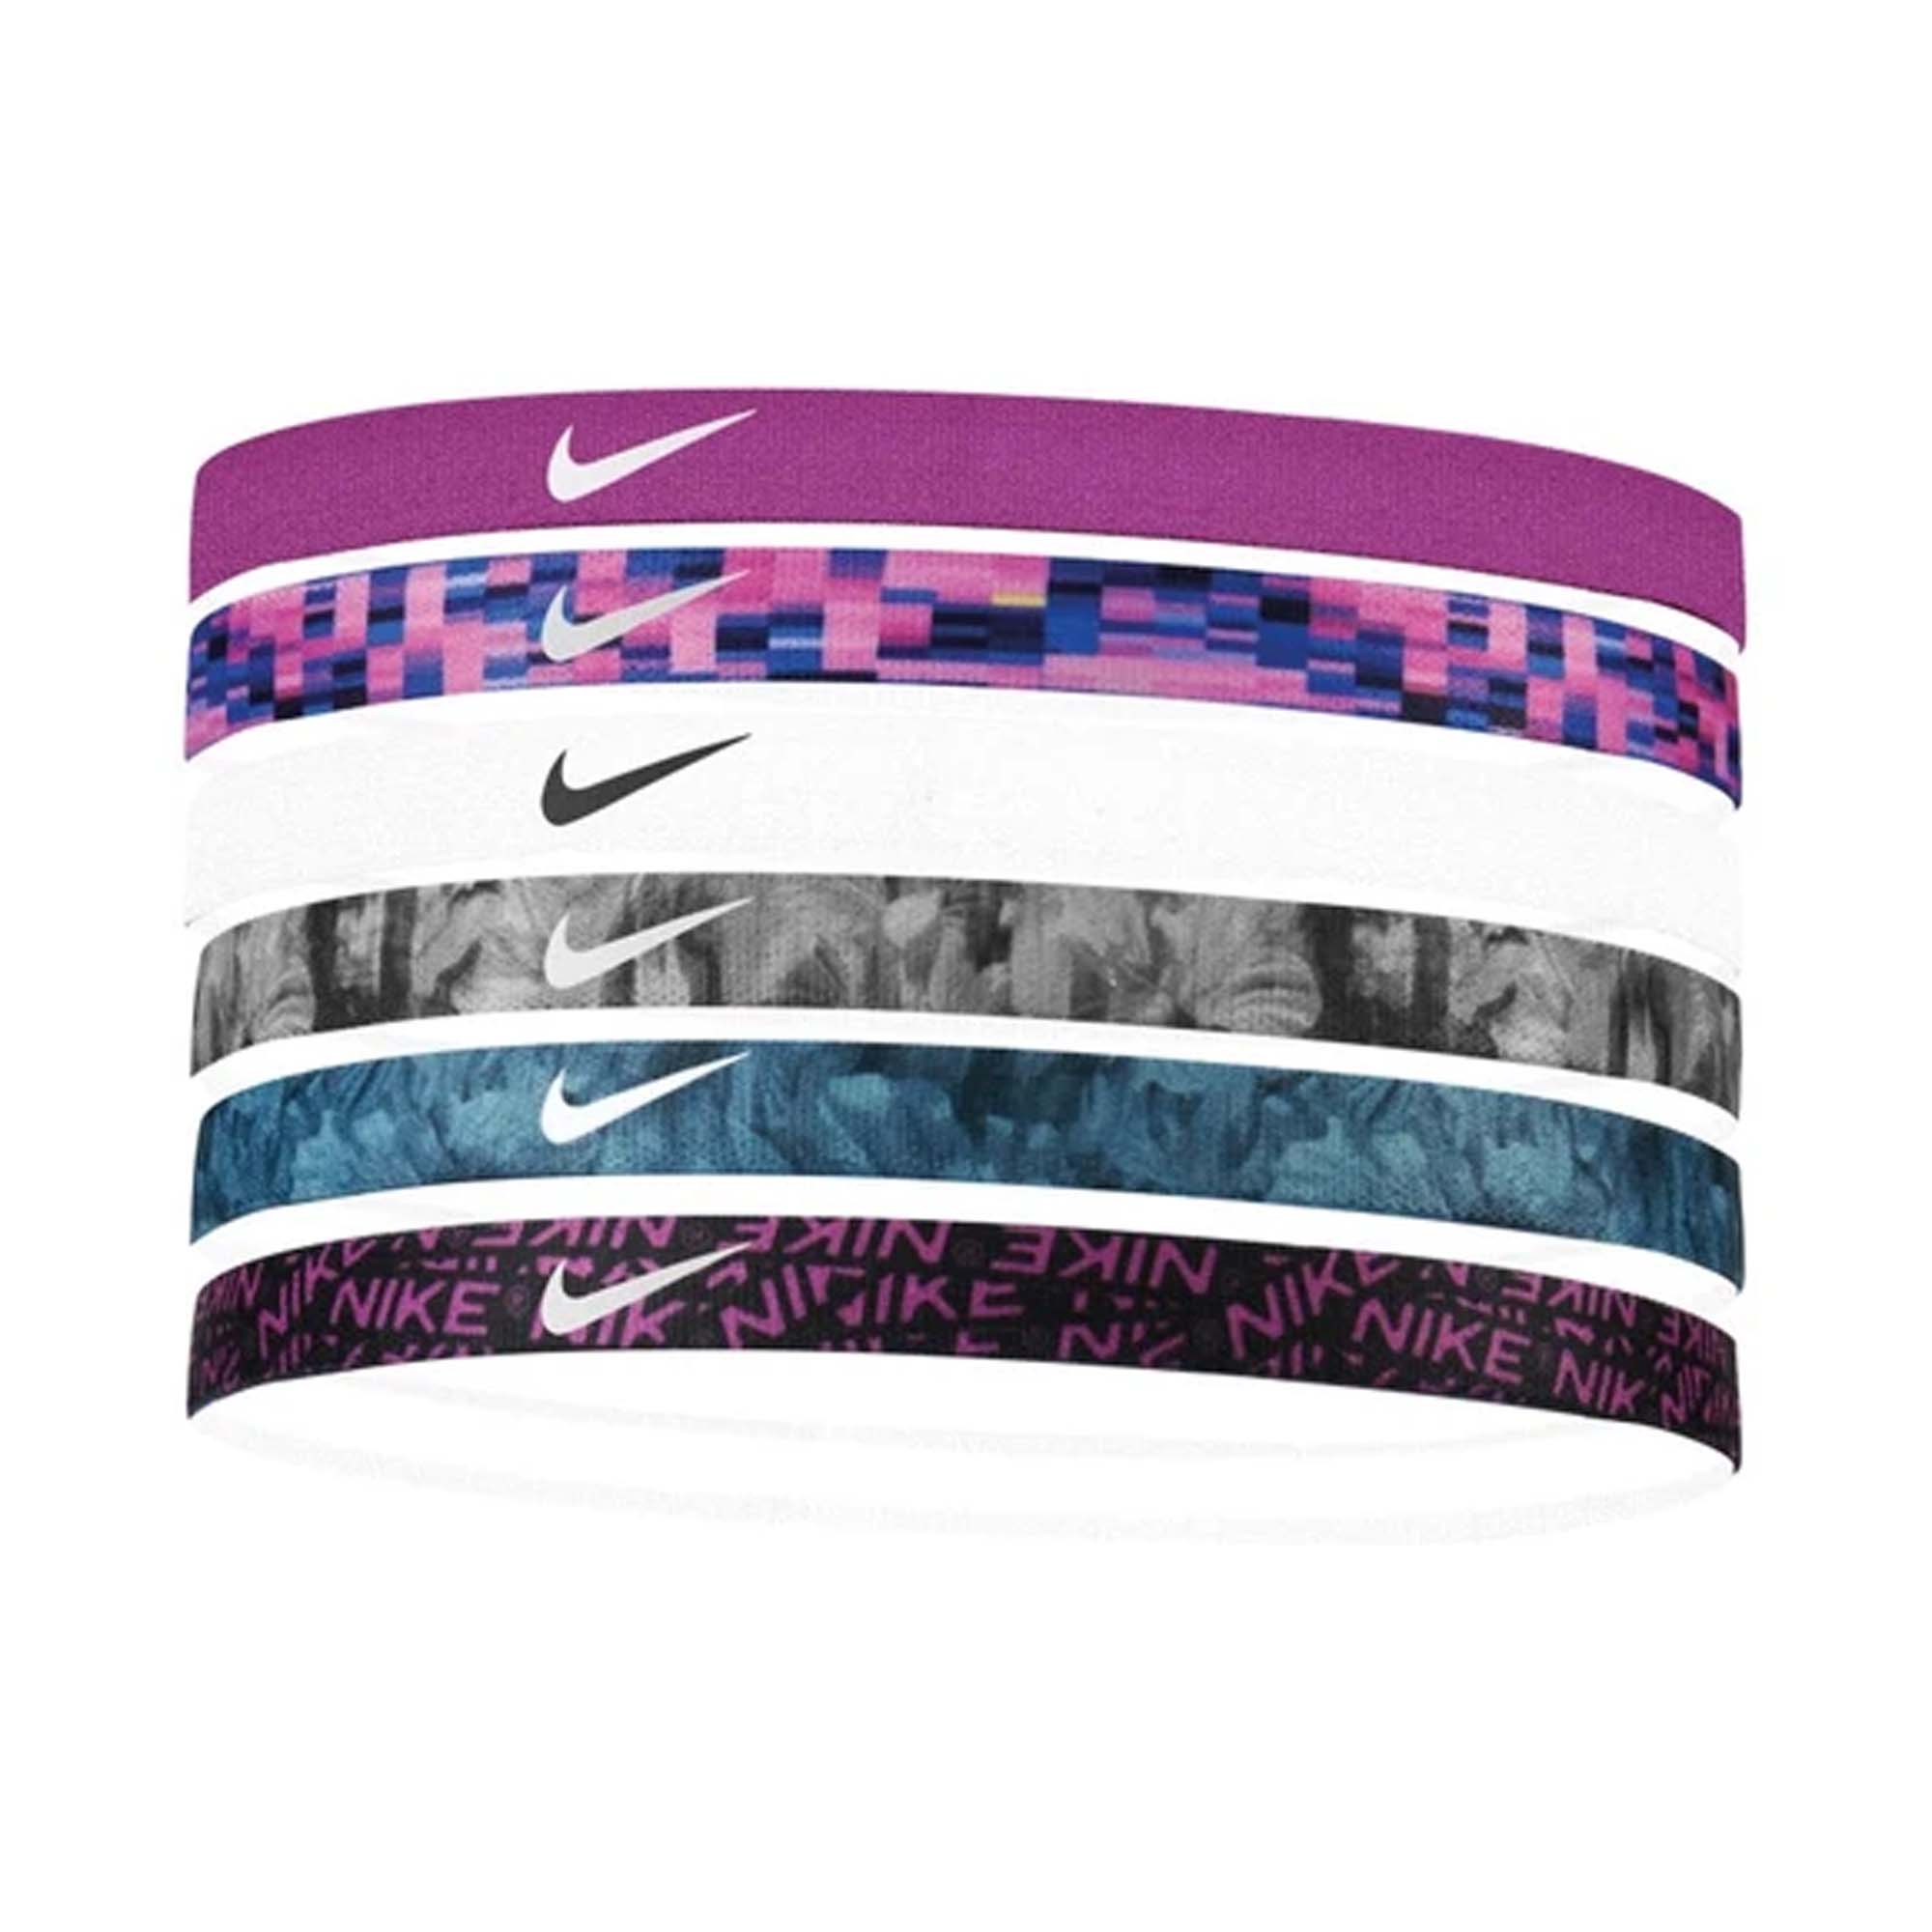 Nike accessoires nike headbands 6 pk printed